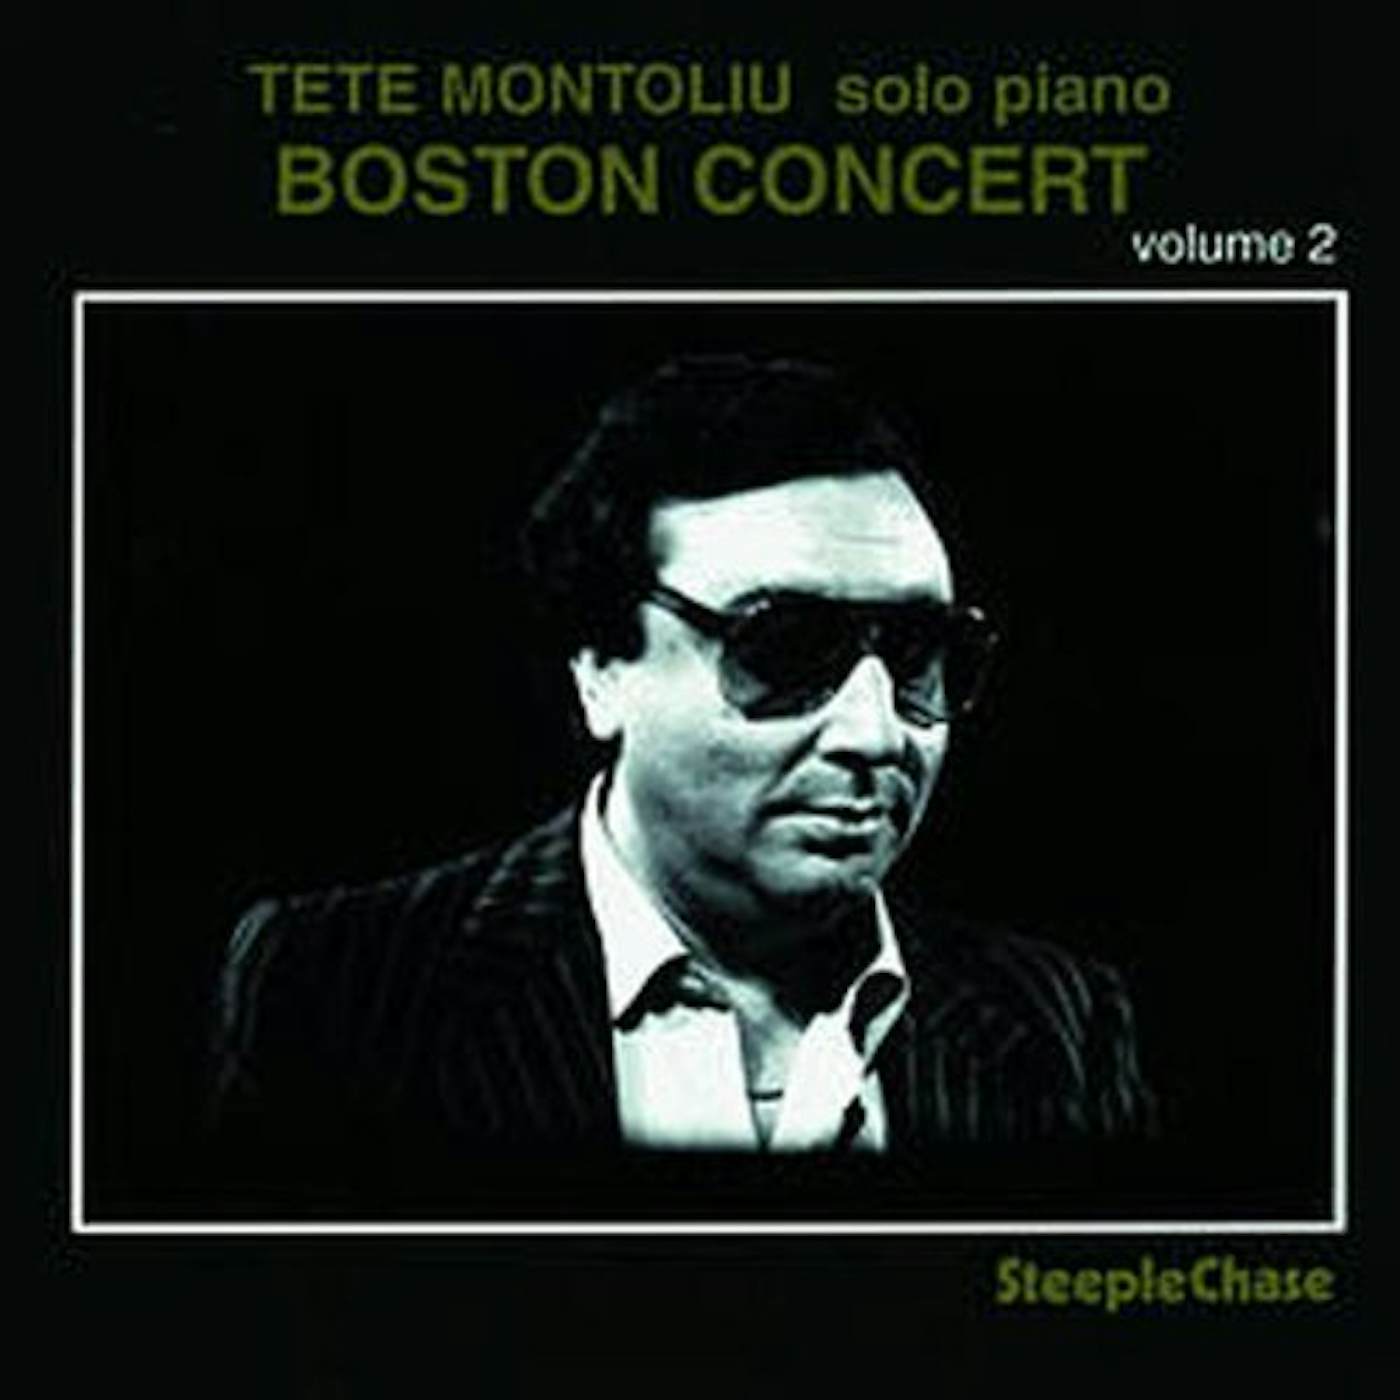 Tete Montoliu BOSTON CONCERT 2 CD